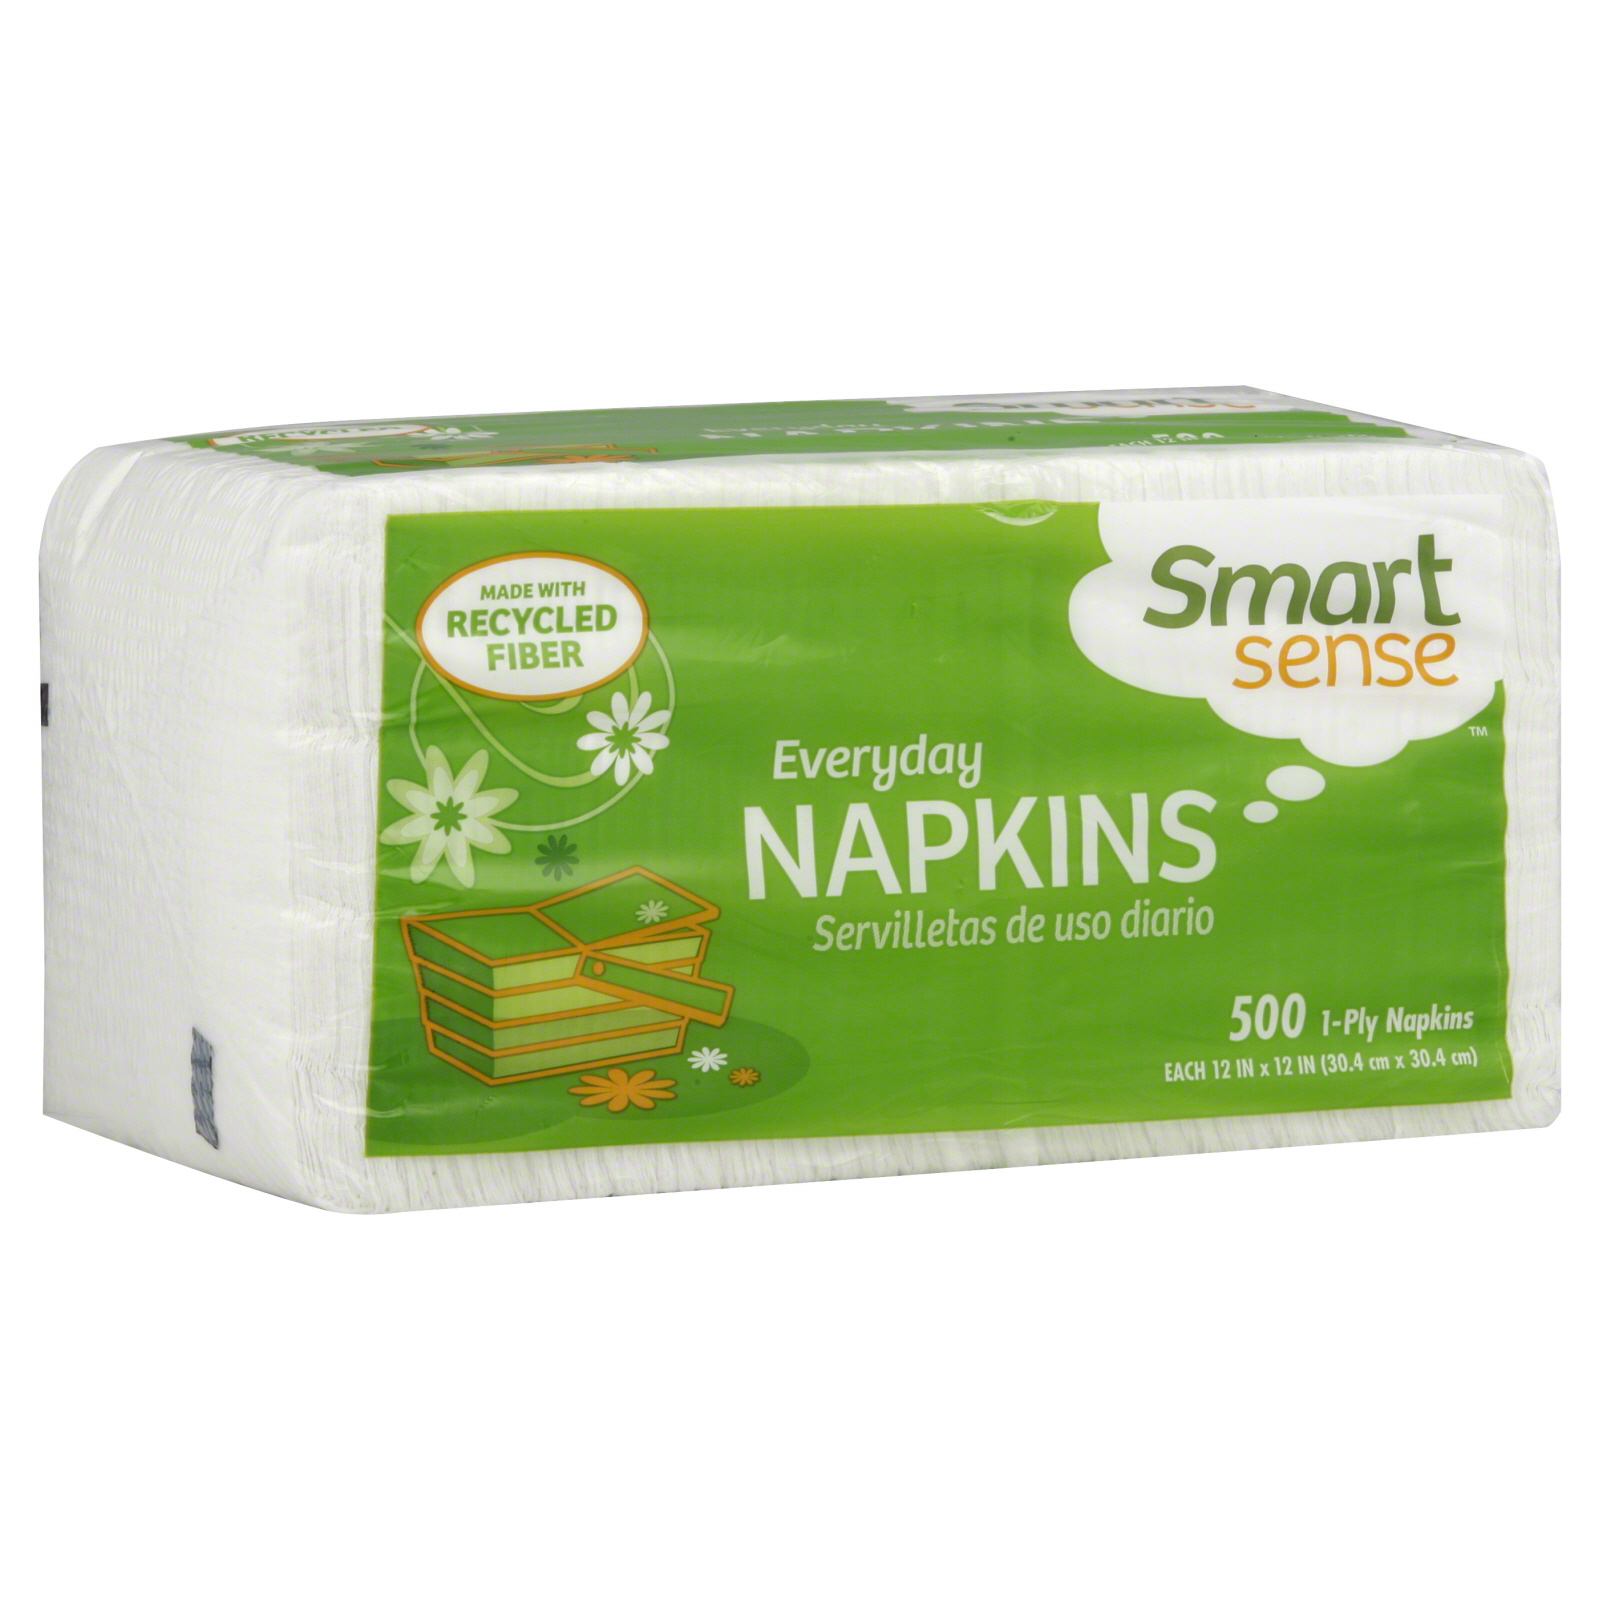 Smart Sense Napkins, Everyday, 1-Ply, 500 napkins